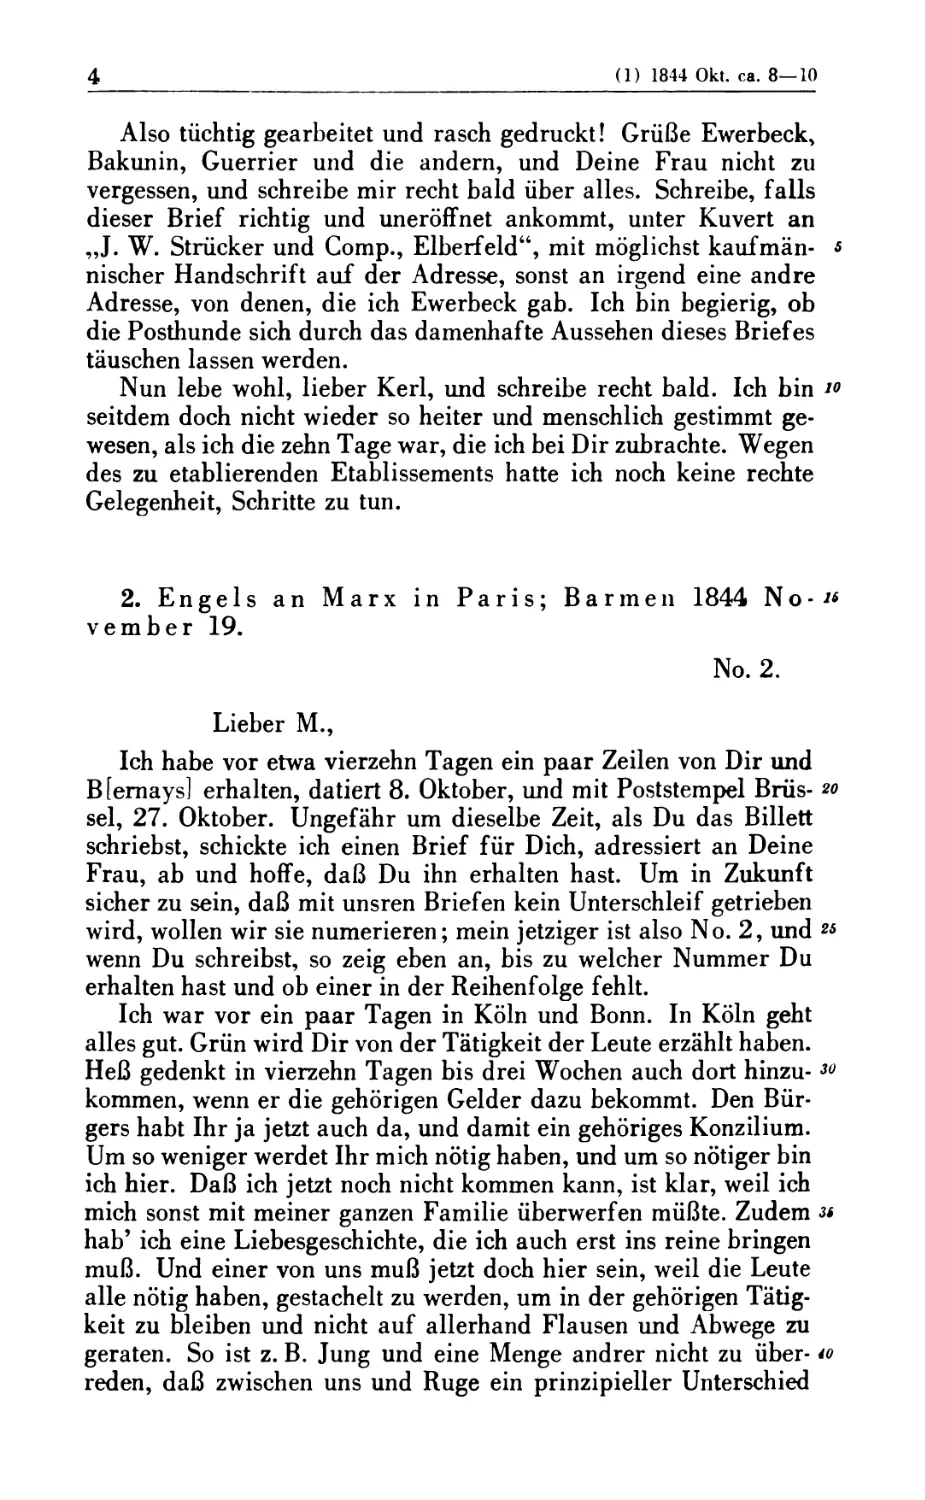 2. Engels an Marx in Paris; Barmen 1844 November 19